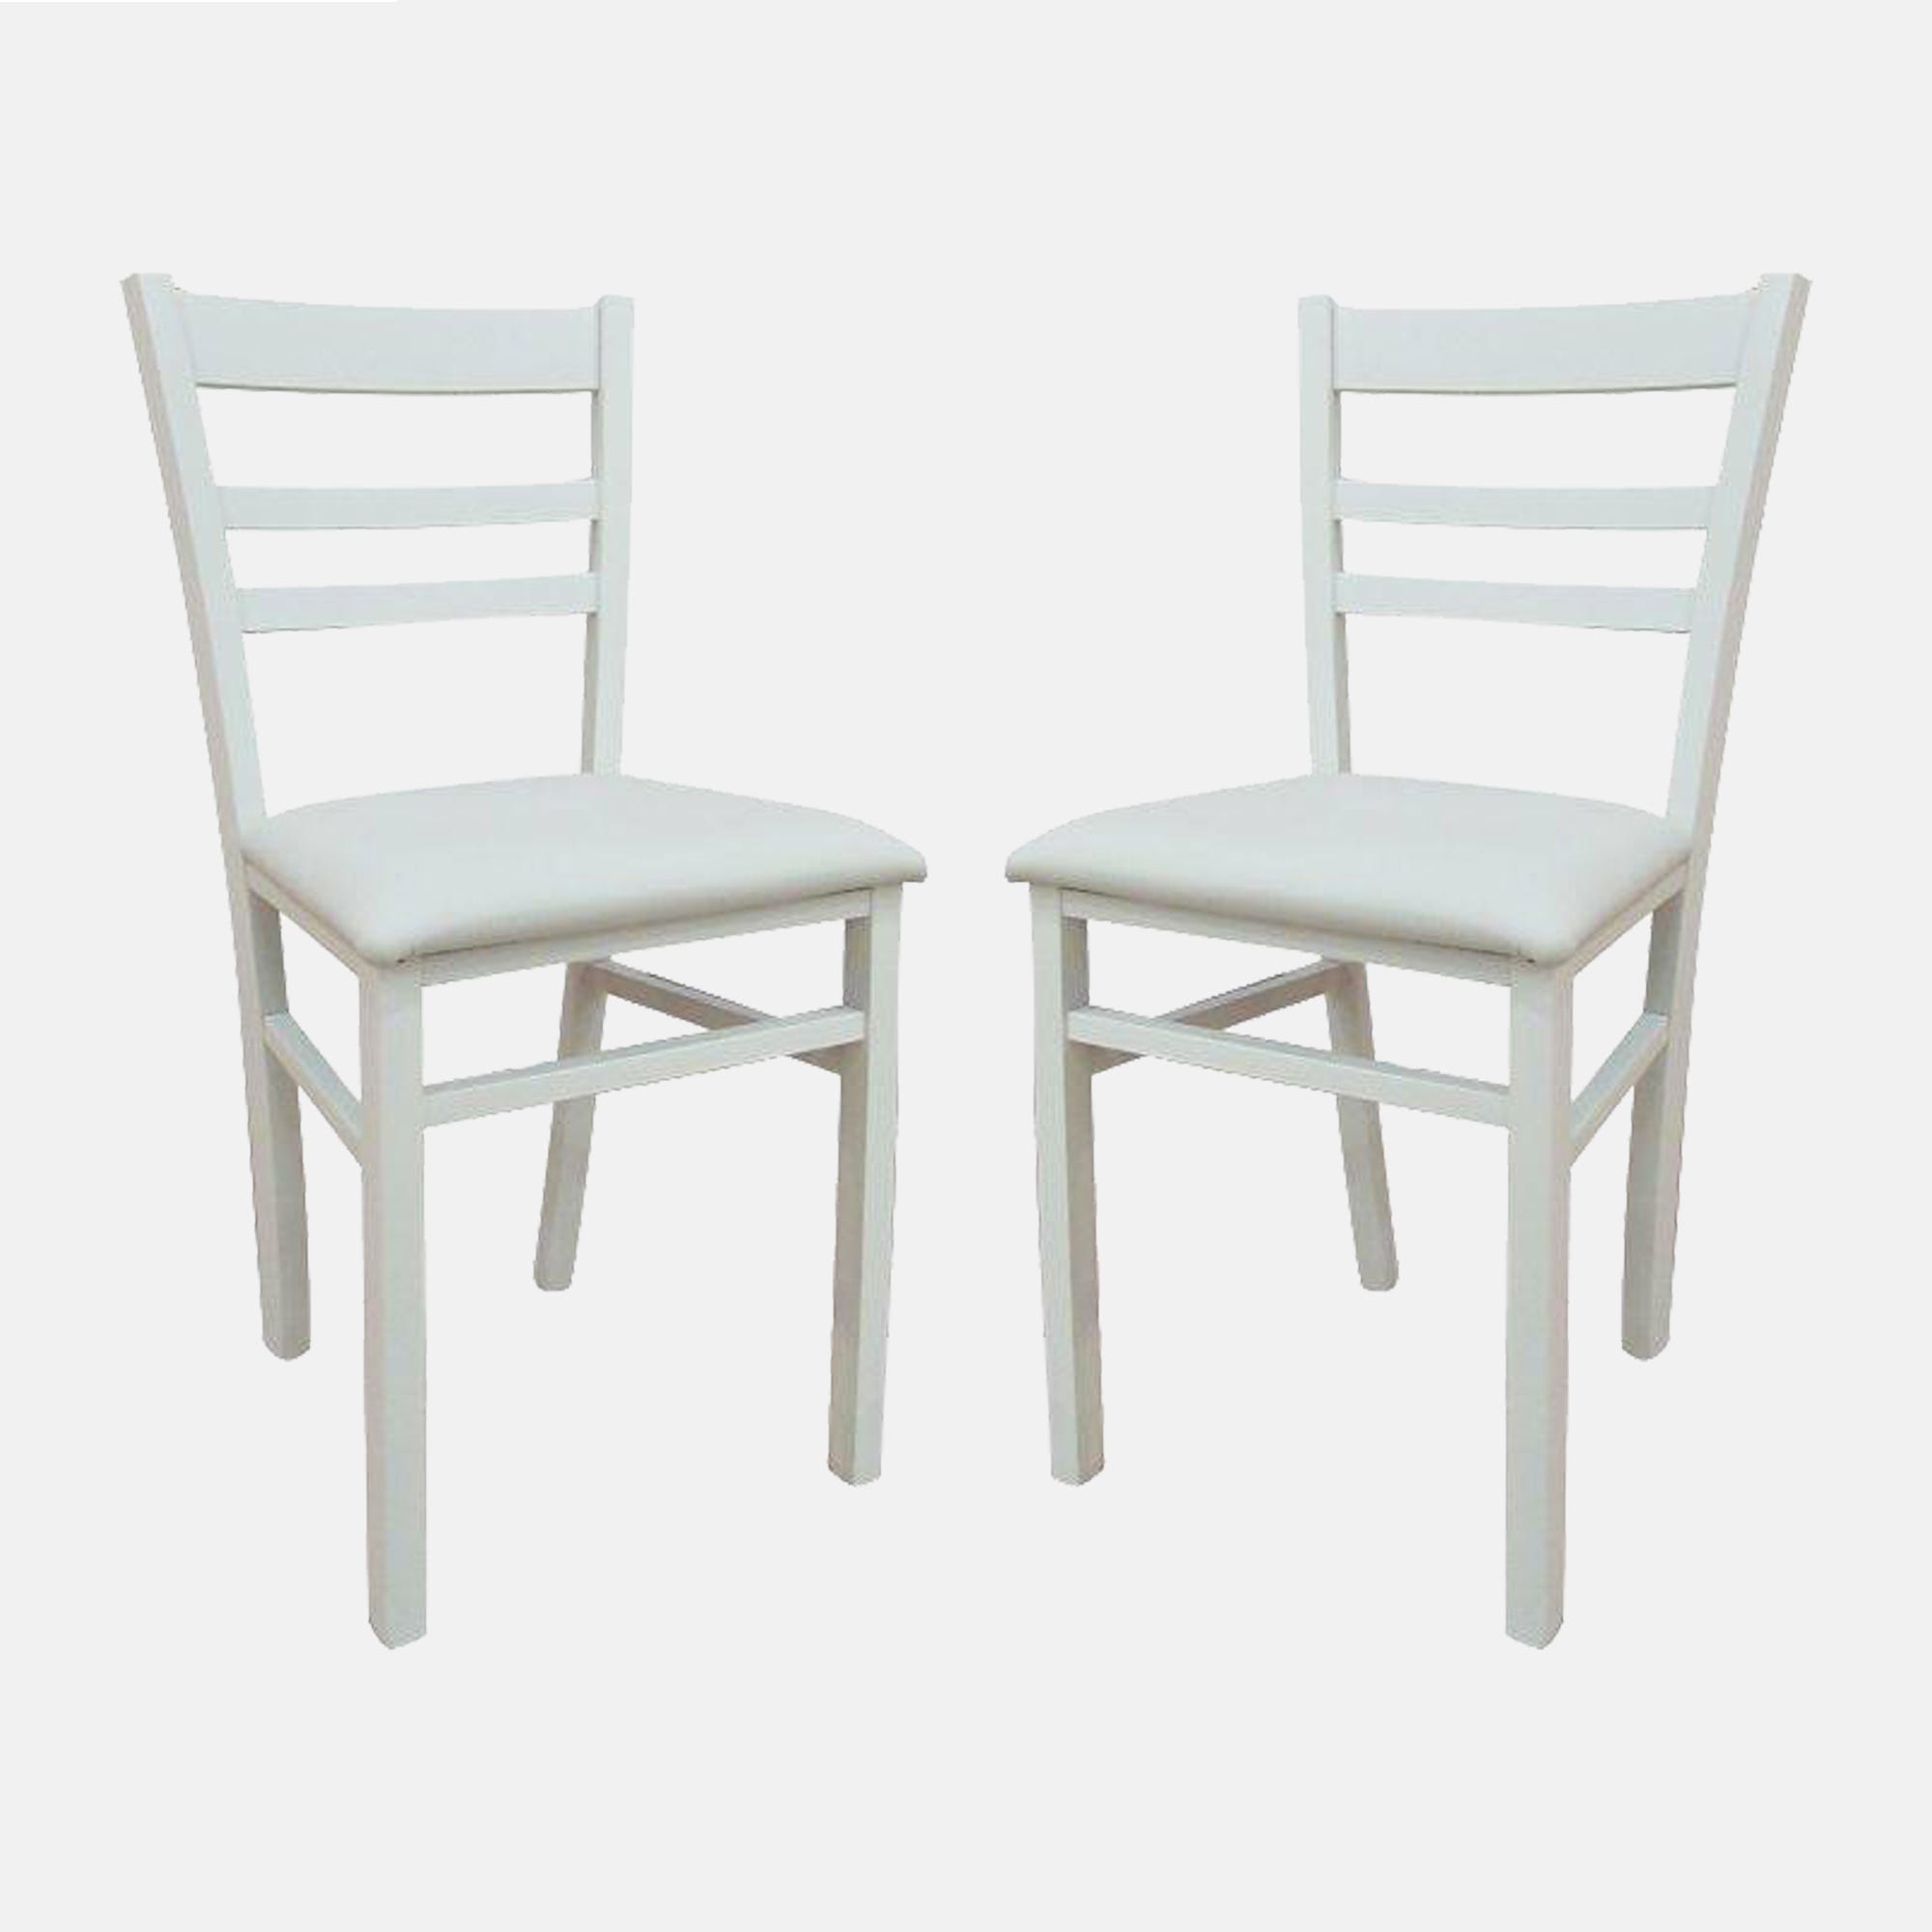 Juego de 2 sillas clásicas de madera, para comedor, cocina o sala de estar,  Made in Italy, 41x43h87 cm, color blanco